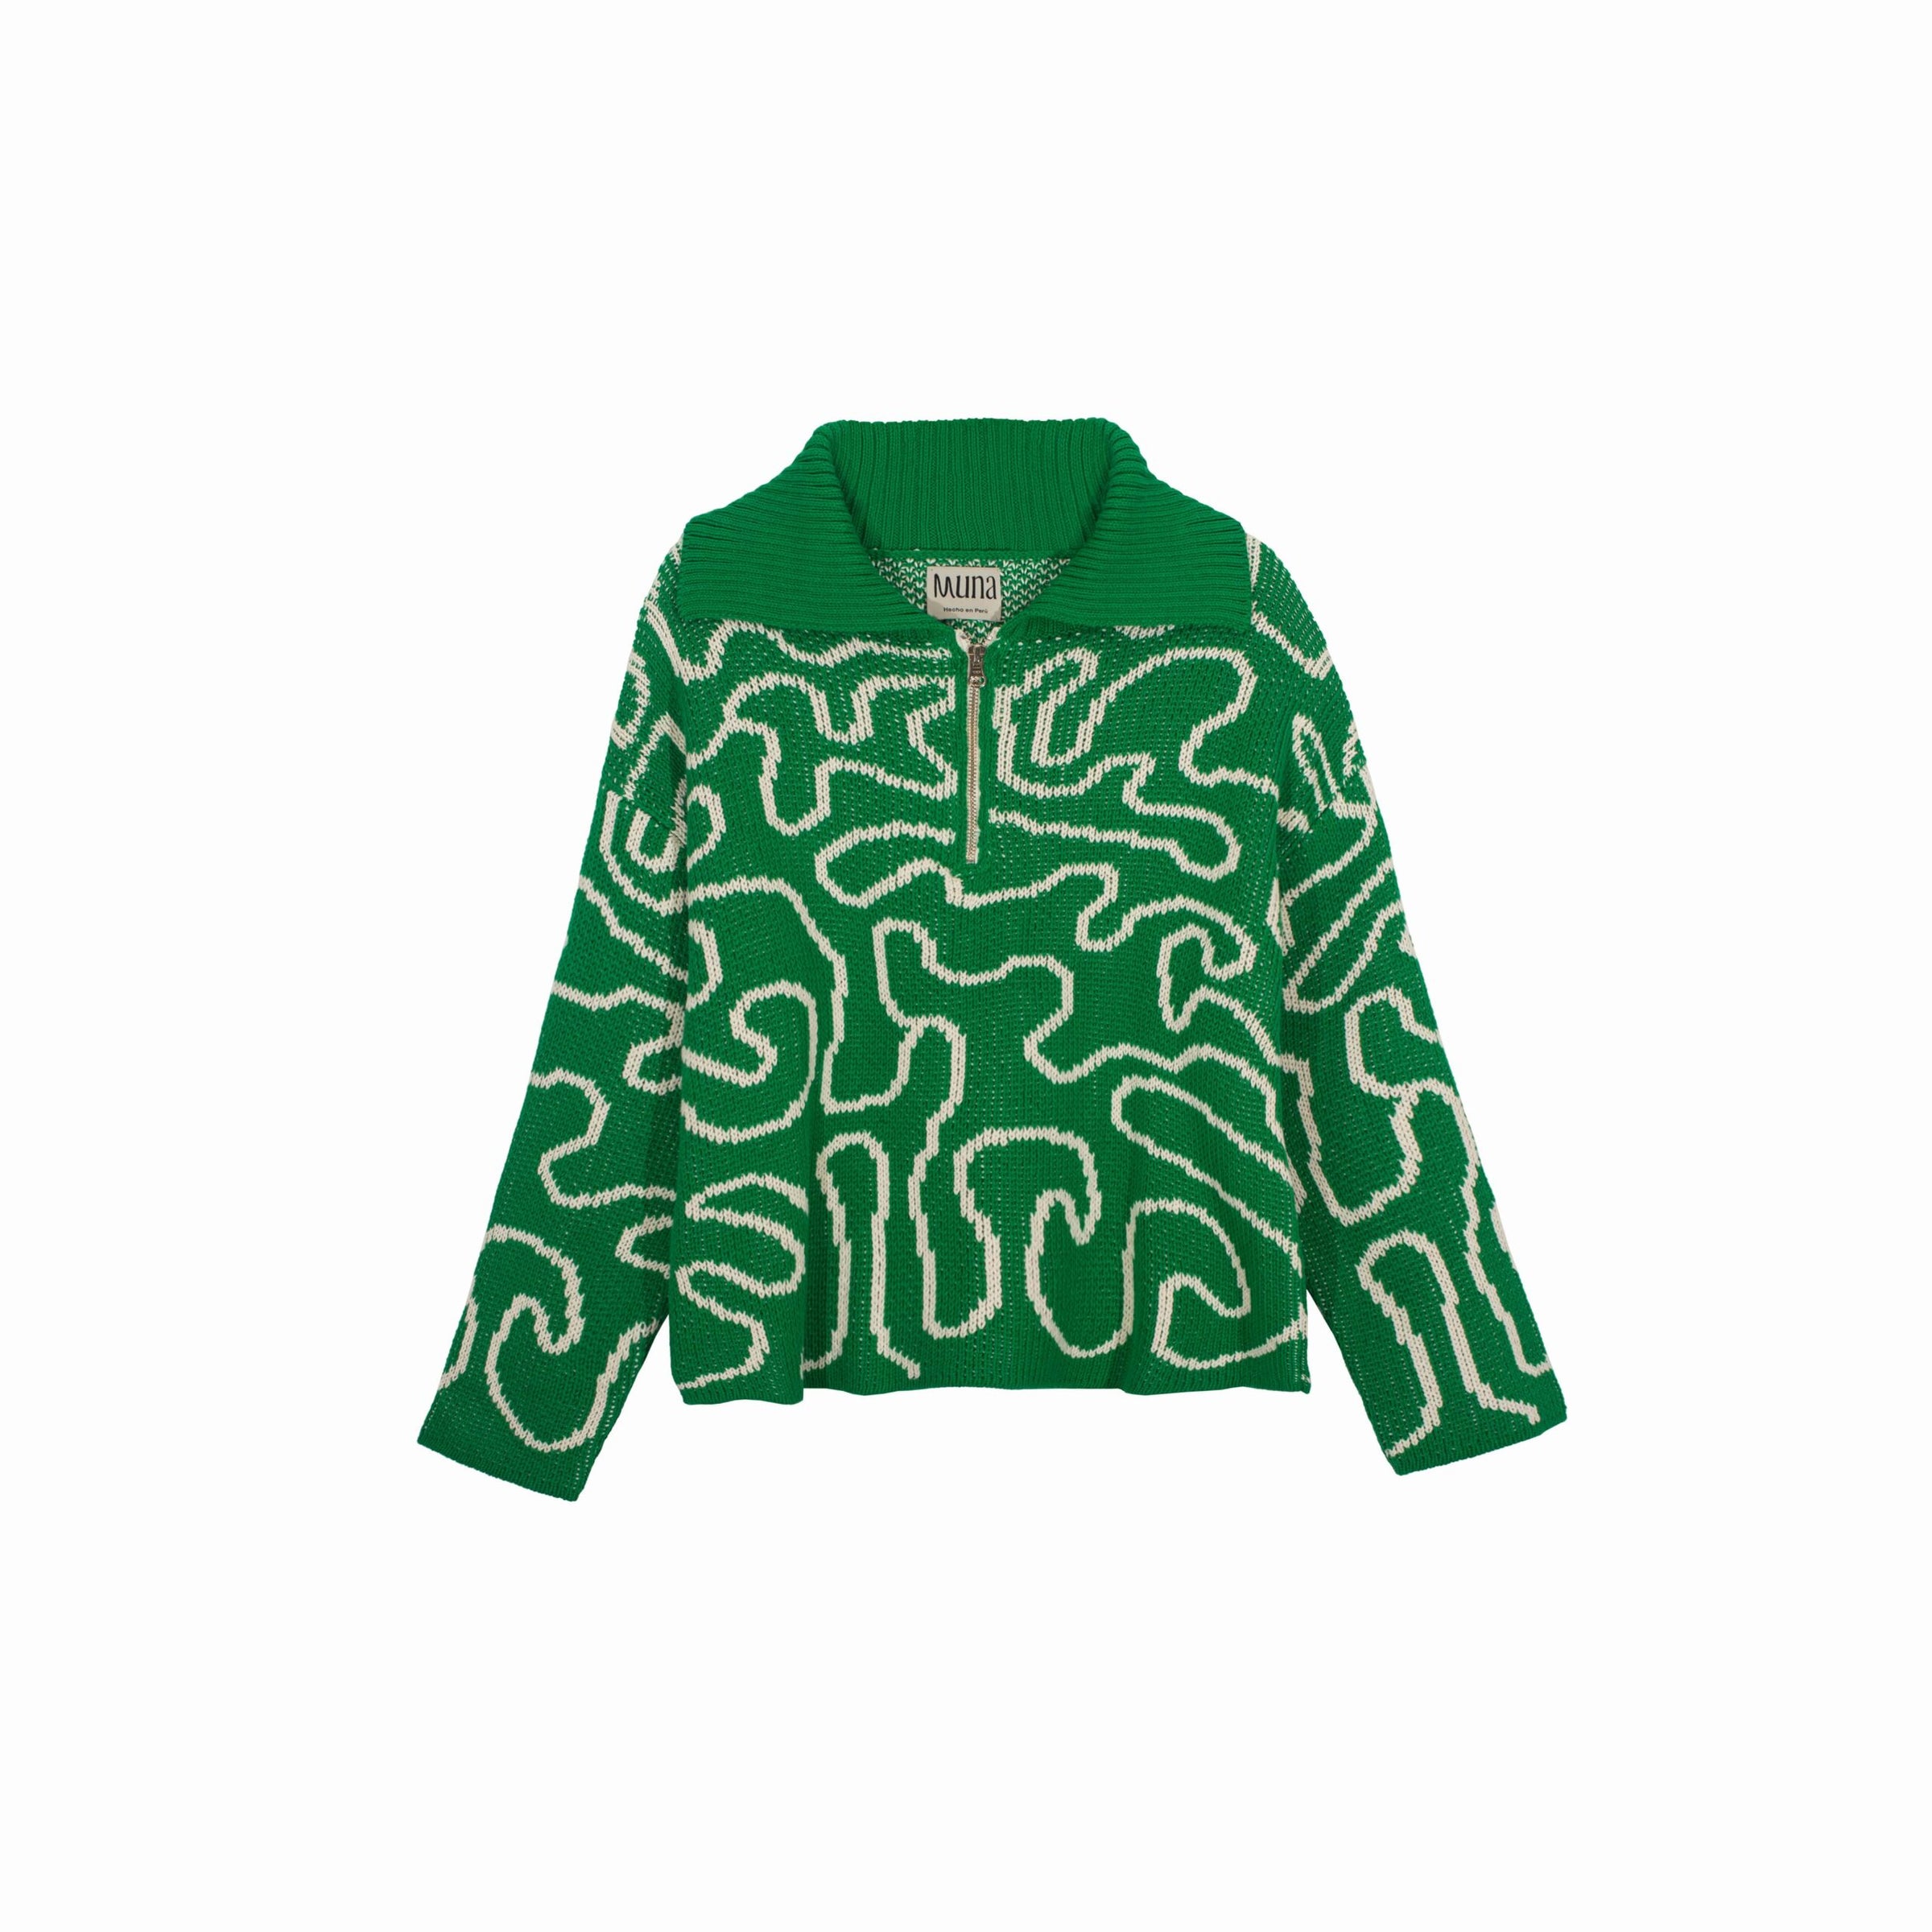 Olas green & ivory sweater